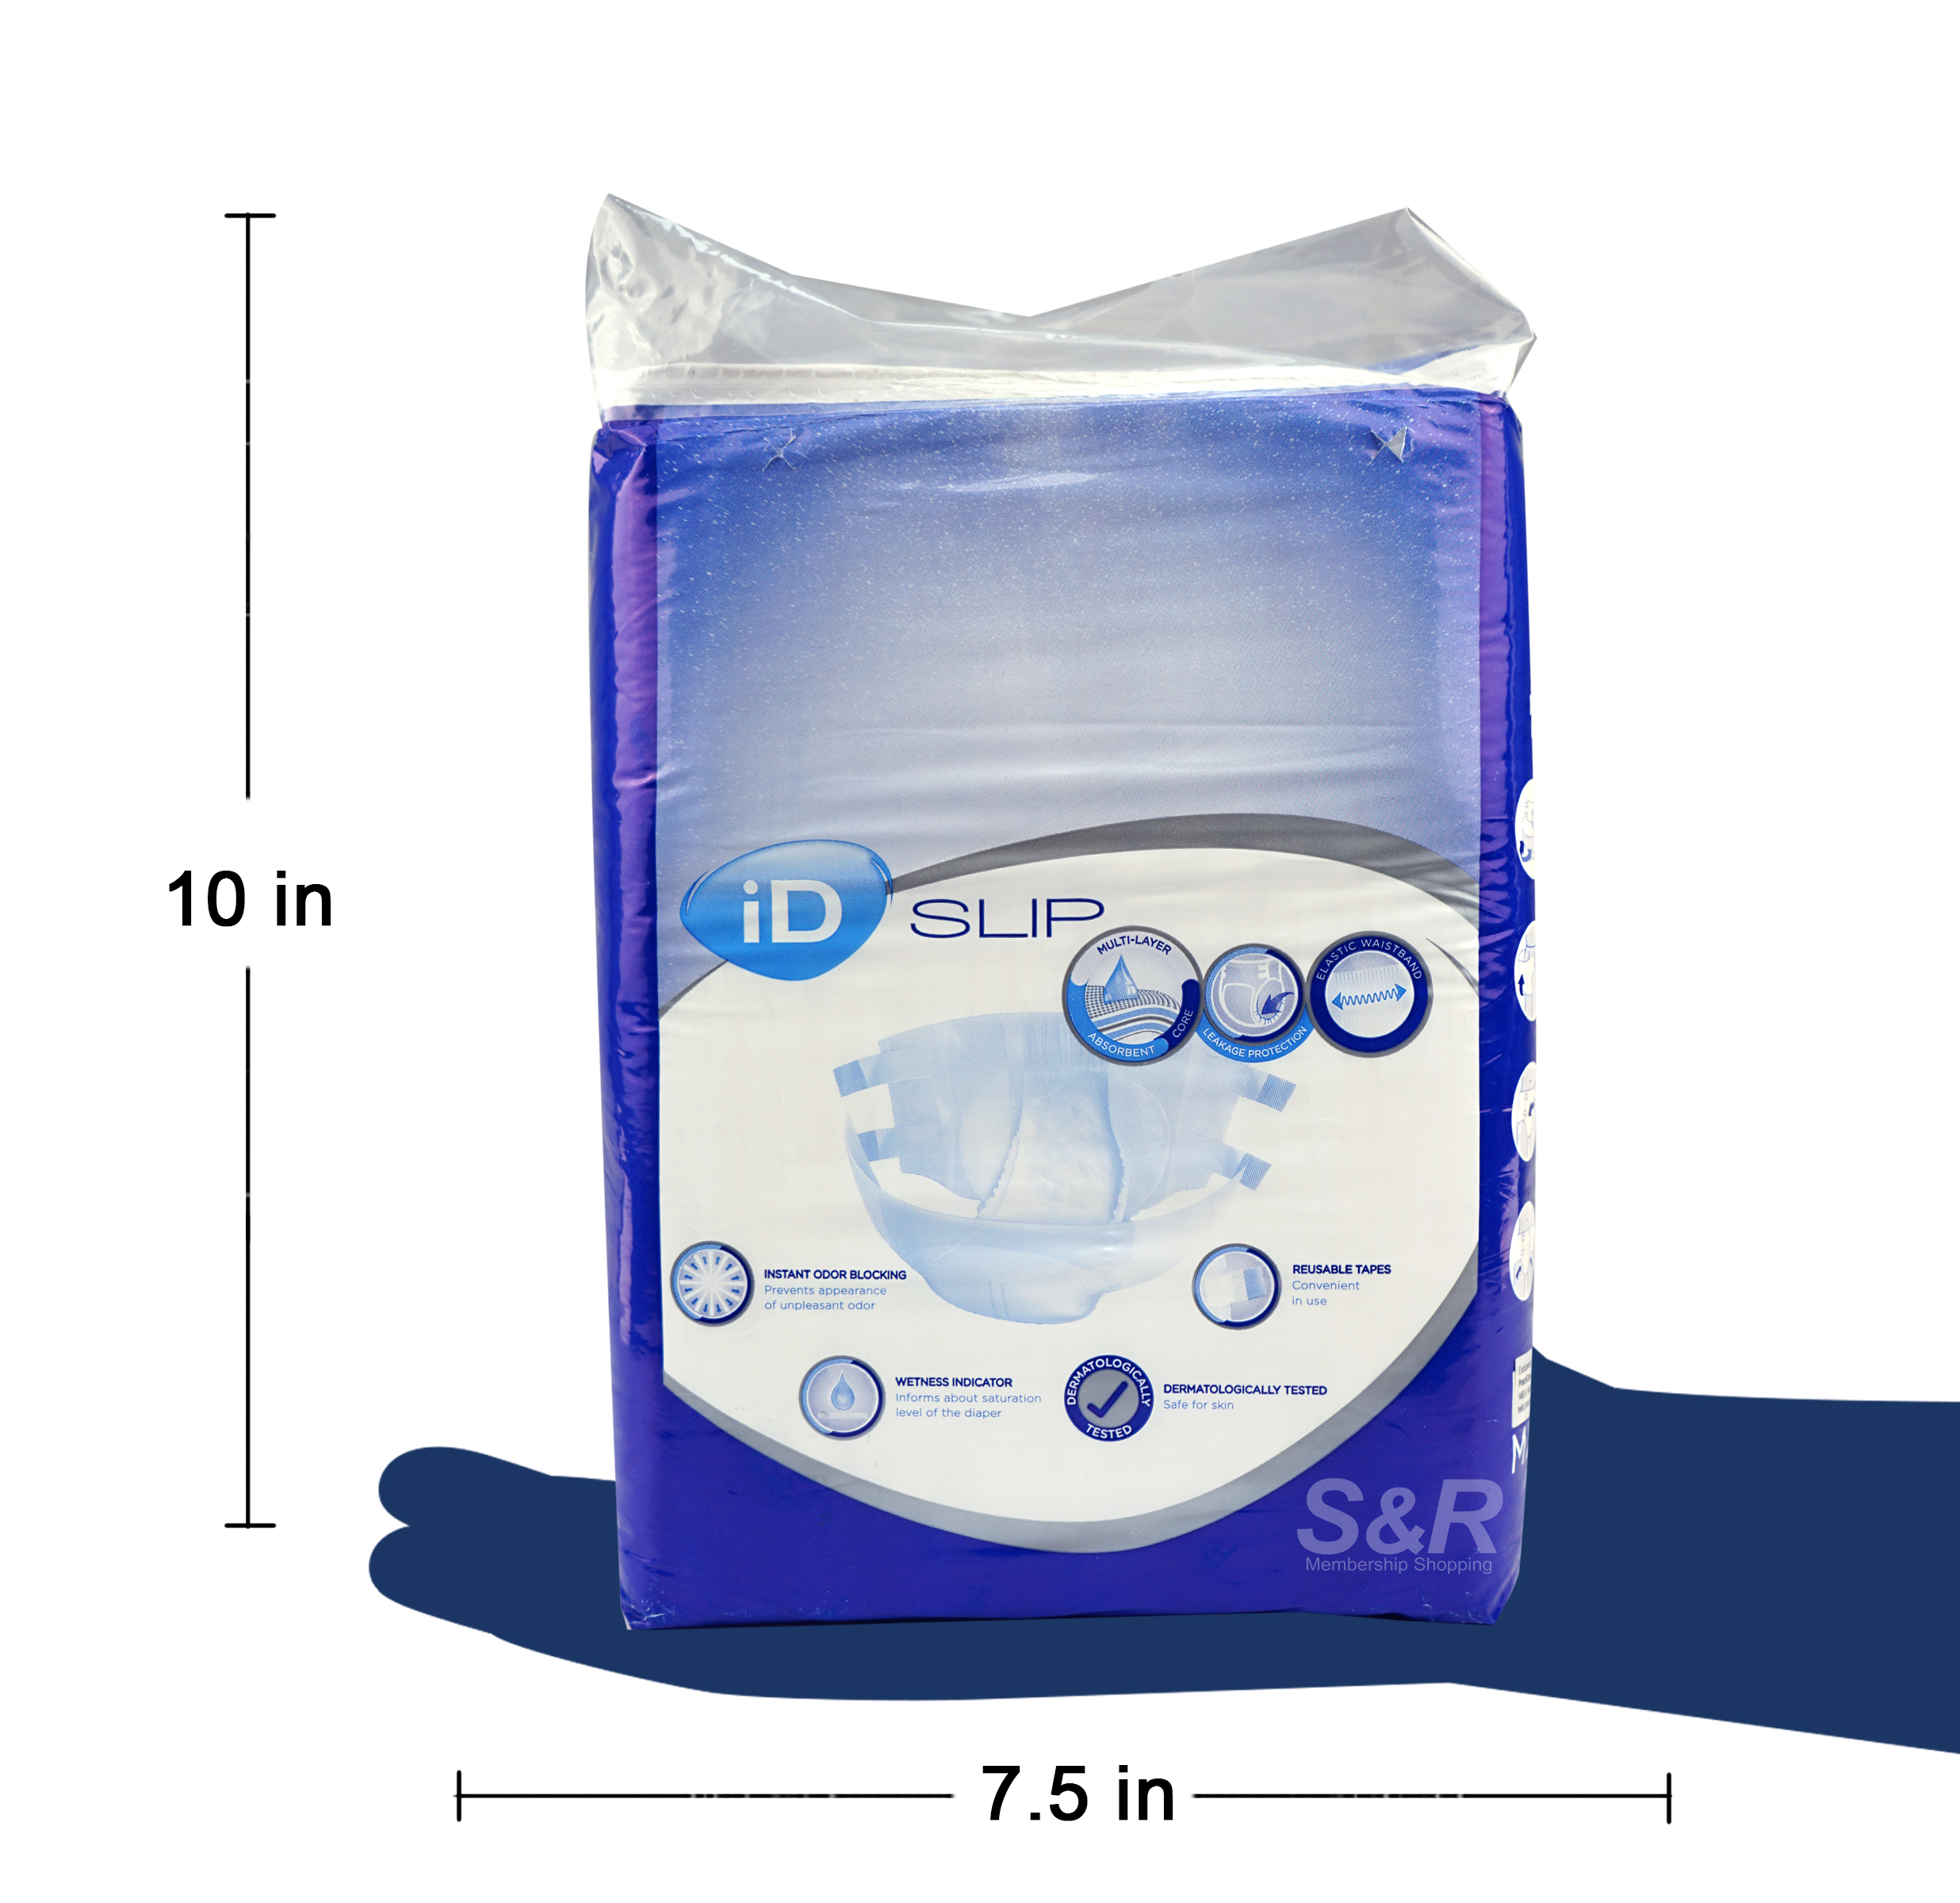 Medium-sized Adult Diapers